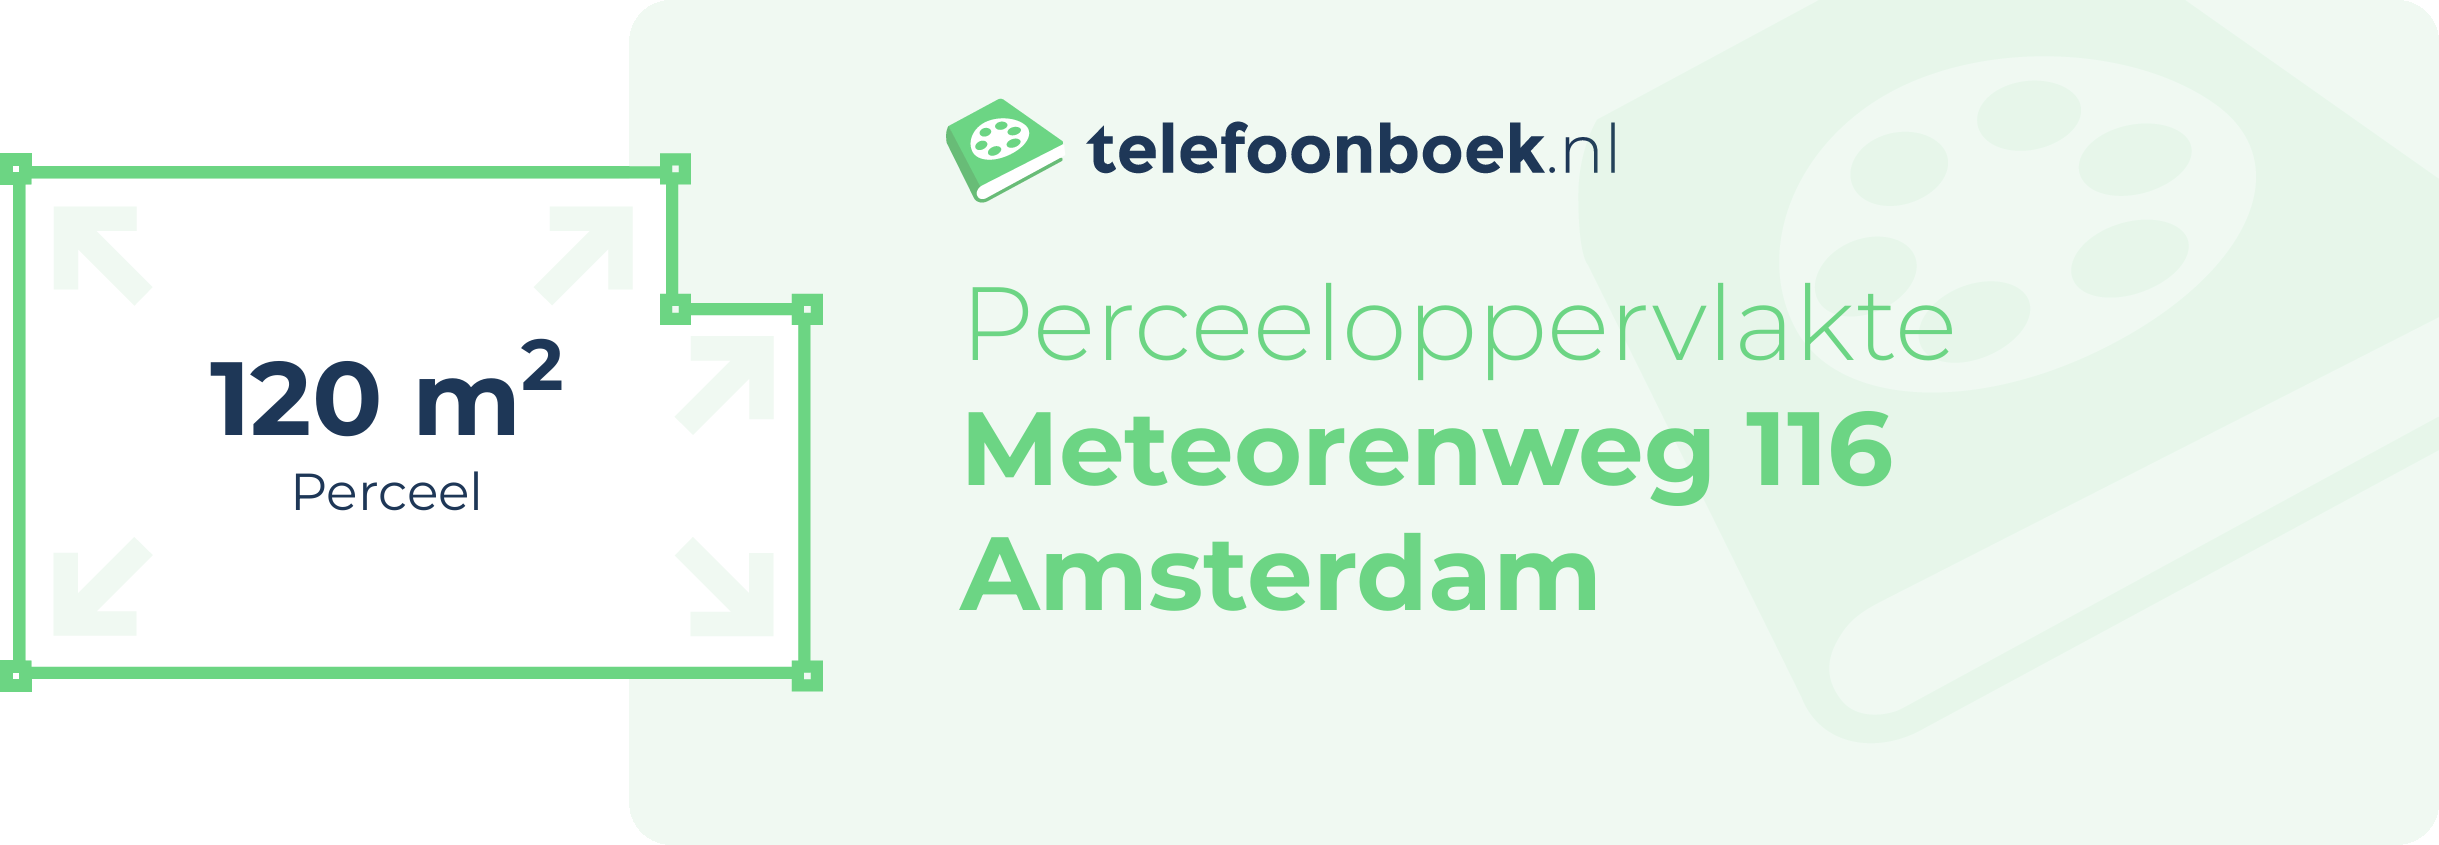 Perceeloppervlakte Meteorenweg 116 Amsterdam